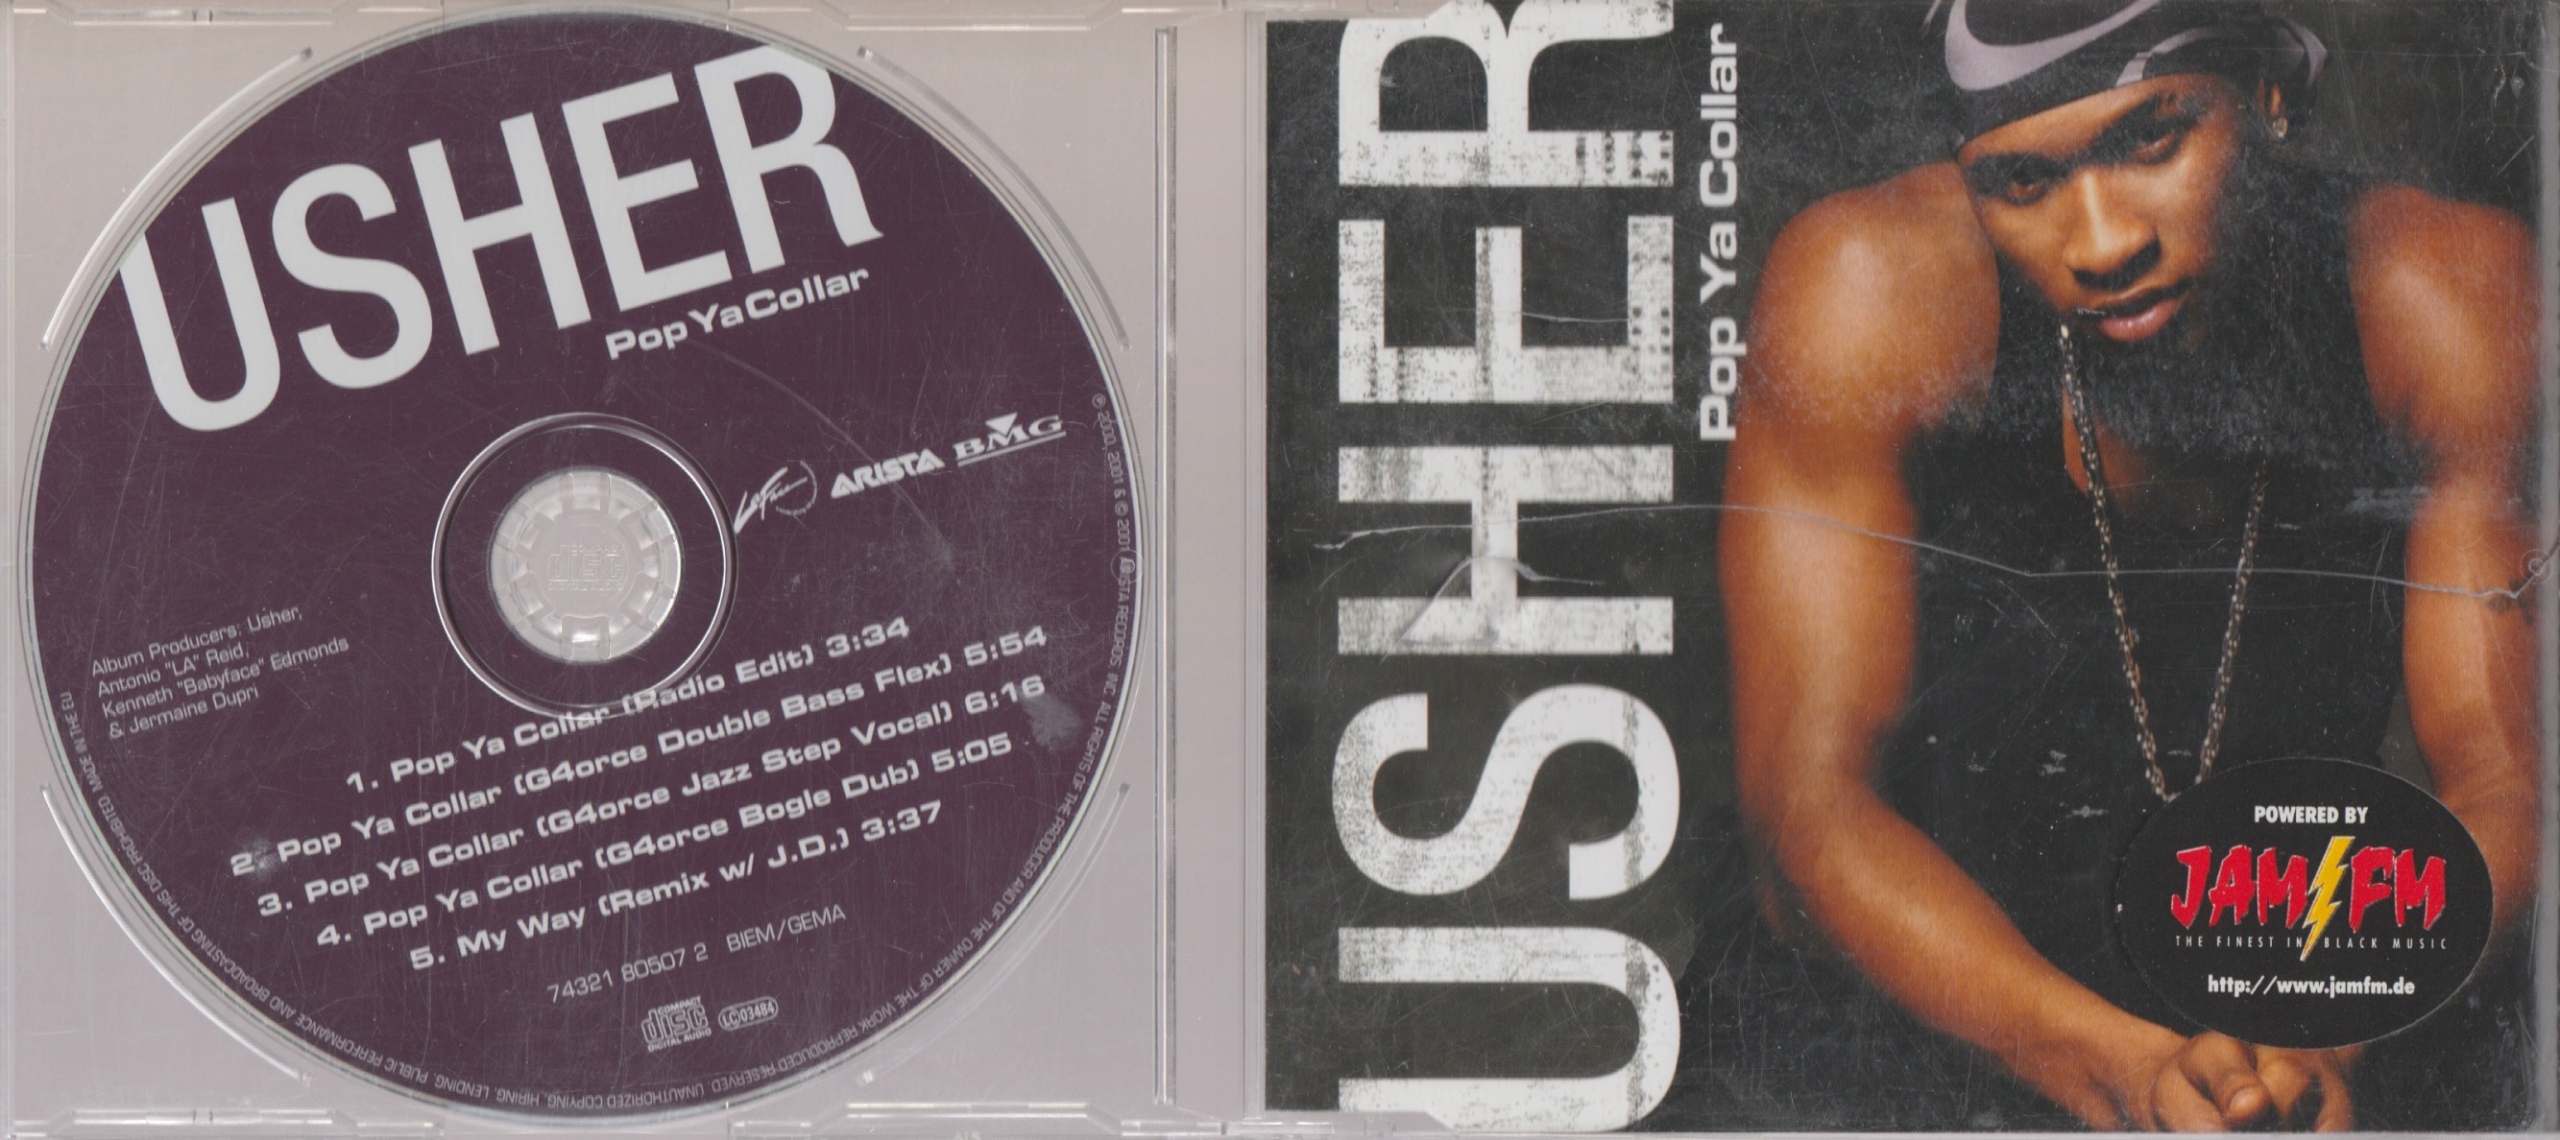 kapacitet fiber yderligere CD Usher - Pop Ya Collar 12449847593 - Sklepy, Opinie, Ceny w Allegro.pl